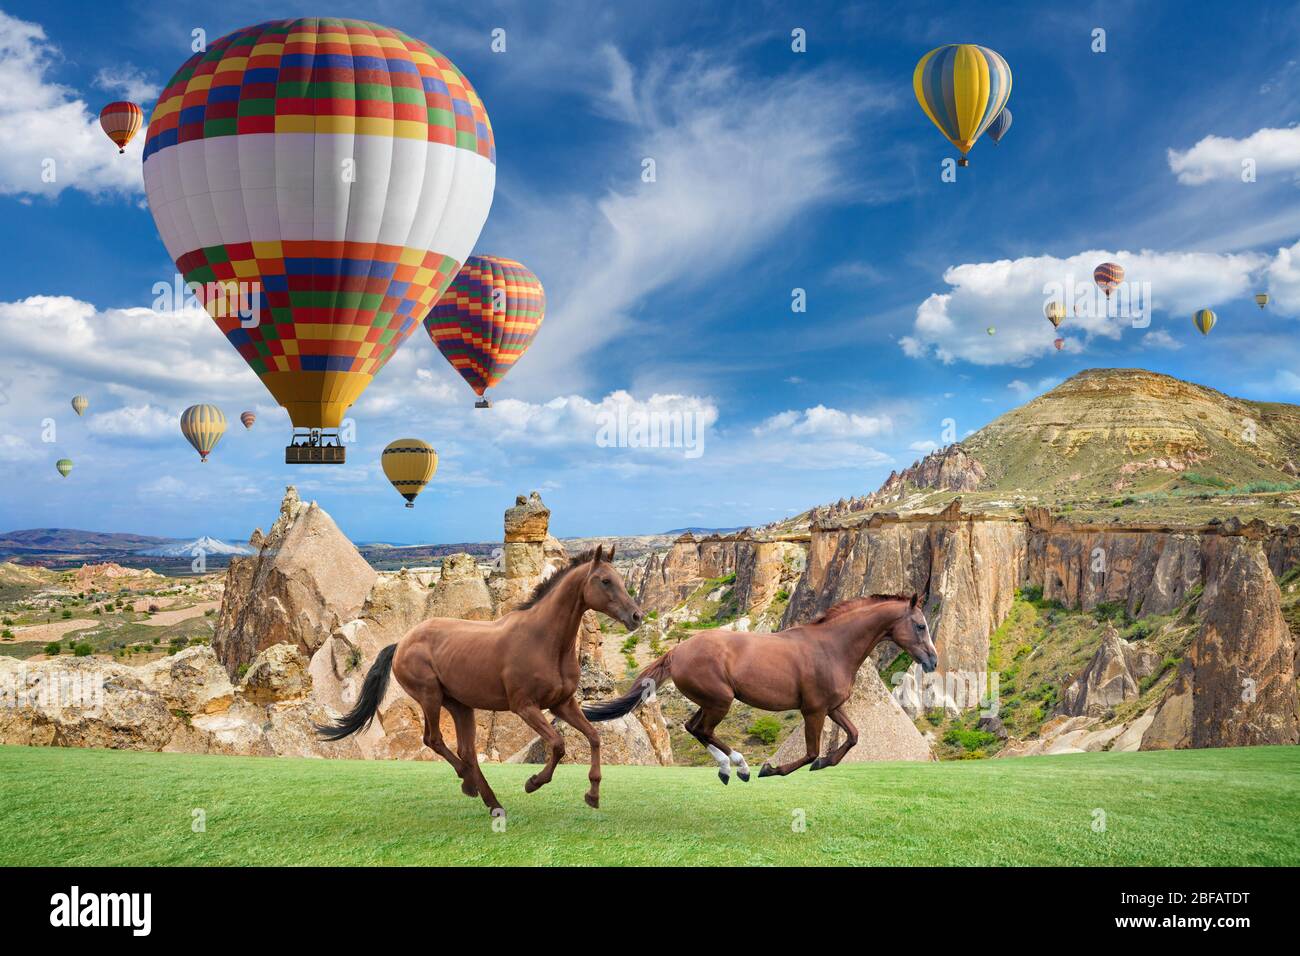 Hot air ballooning is most popular attraction in Kapadokya. Two horses running on green grass near mushroom mountains in Cappadocia, Turkey. Stock Photo